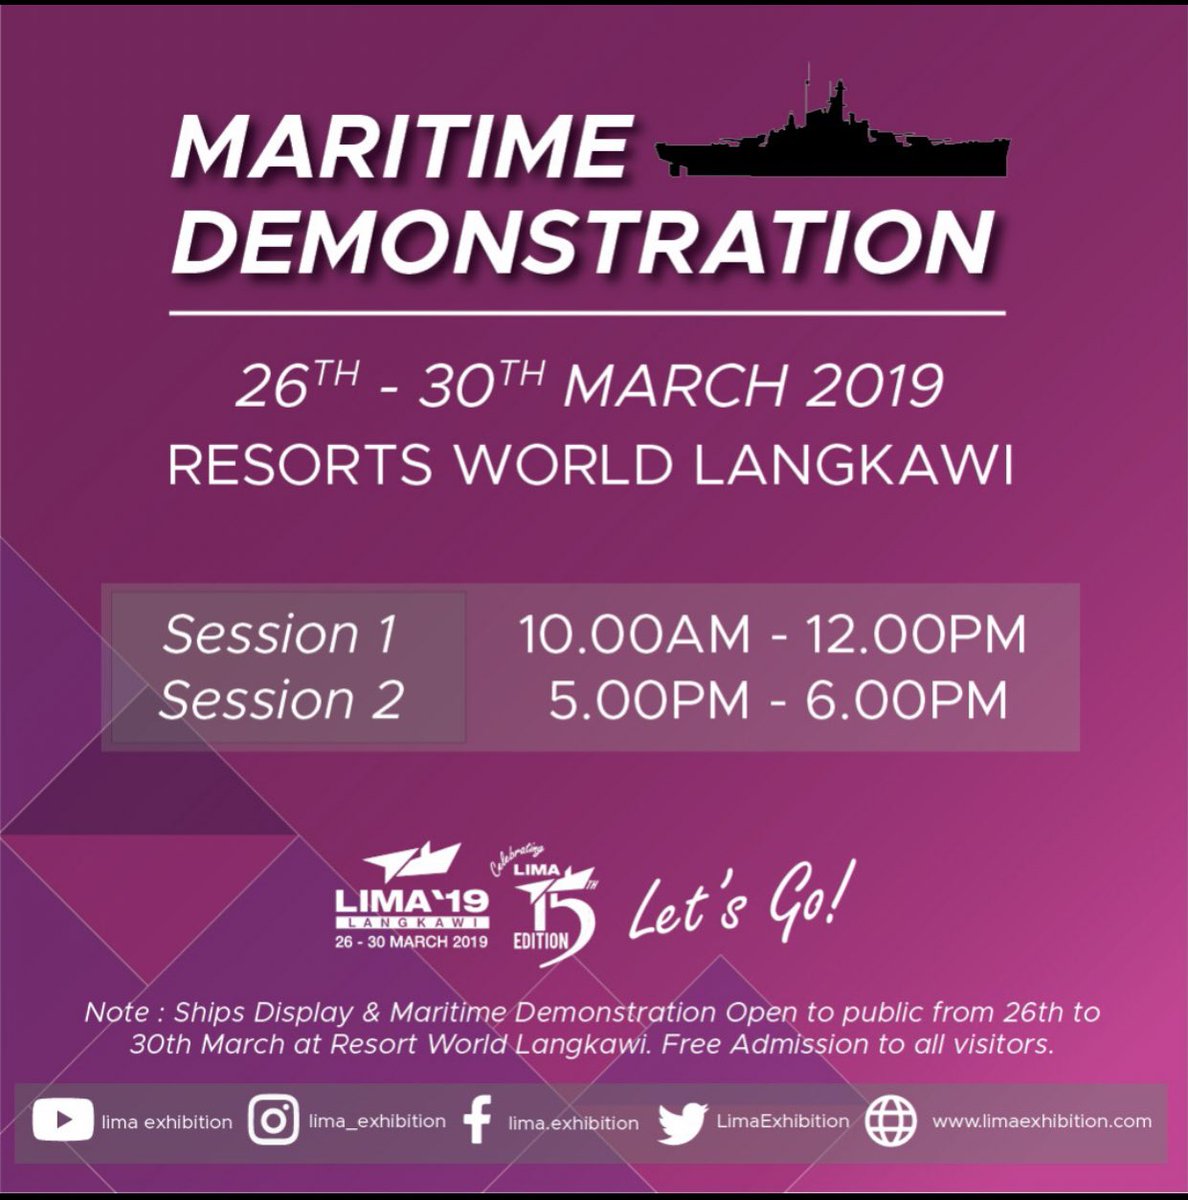 One more hour till the Session 1 of Maritime Demonstration ends! Let's witness the spectacular show together!

Entrance is FREE FOR ALL VISITORS at Resorts World Hotel Langkawi 
#LIMA19 #LebihHebat #MindefMalaysia #fantastikLIMA19 #jomgerak #MITIatLIMA19